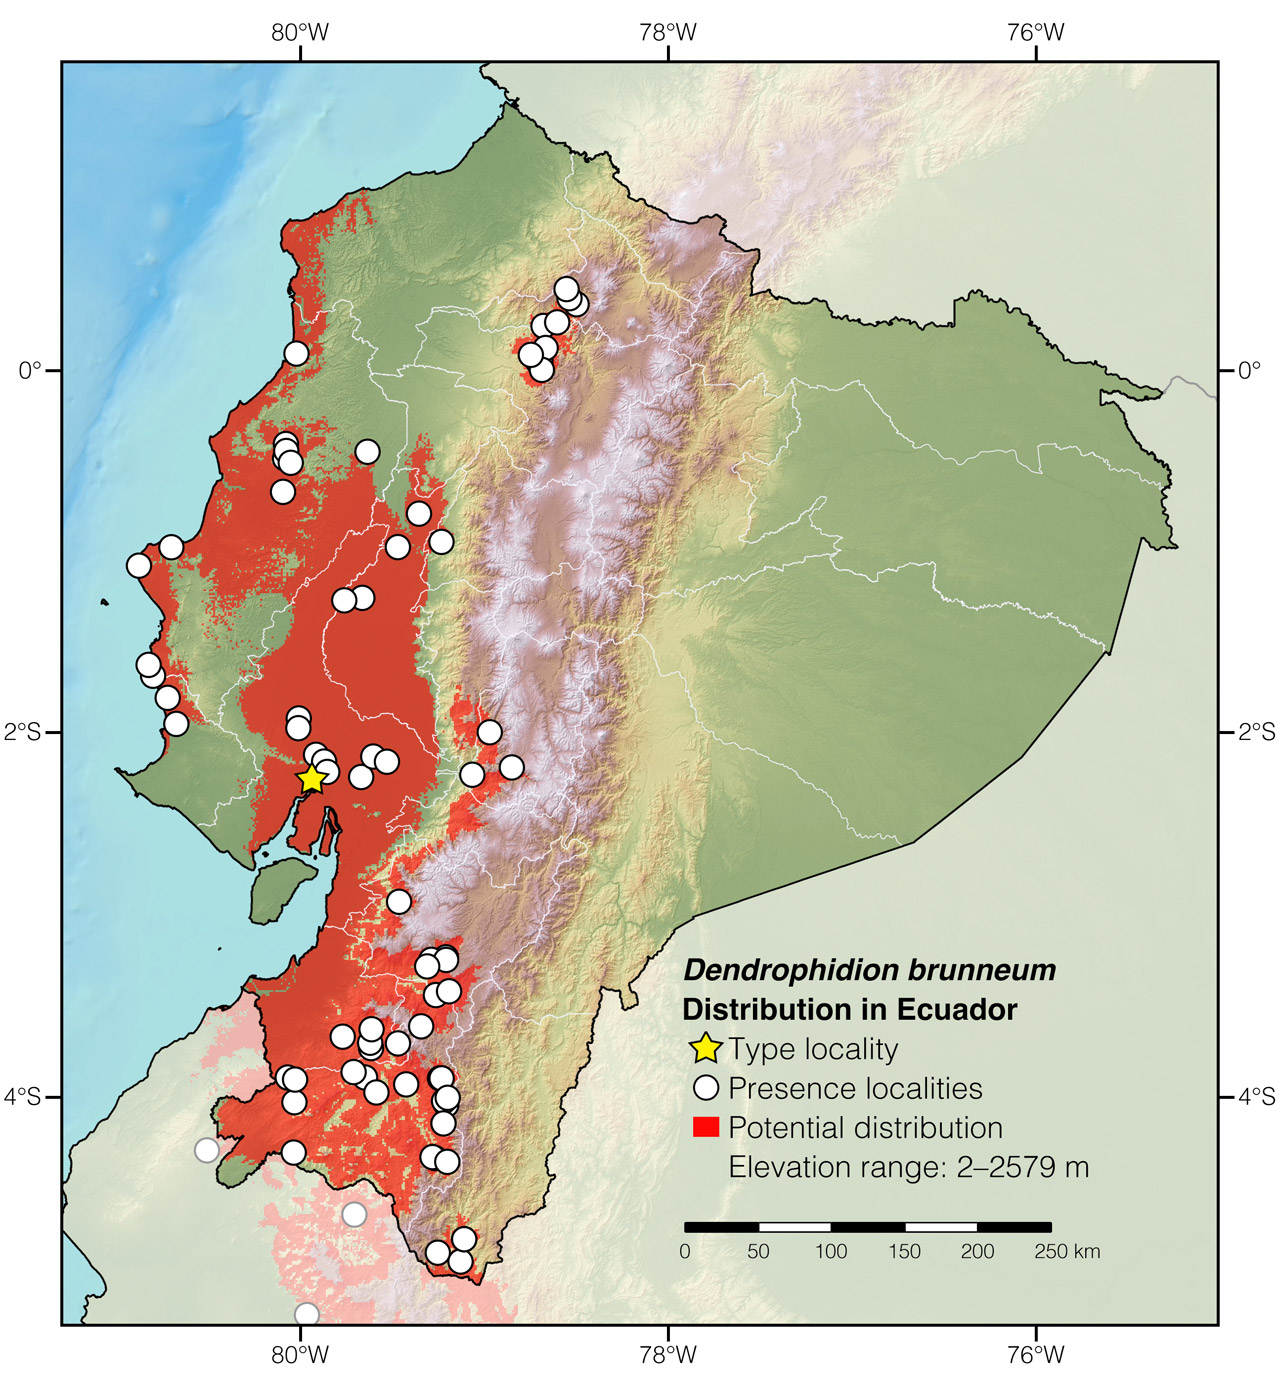 Distribution of Dendrophidion brunneum in Ecuador